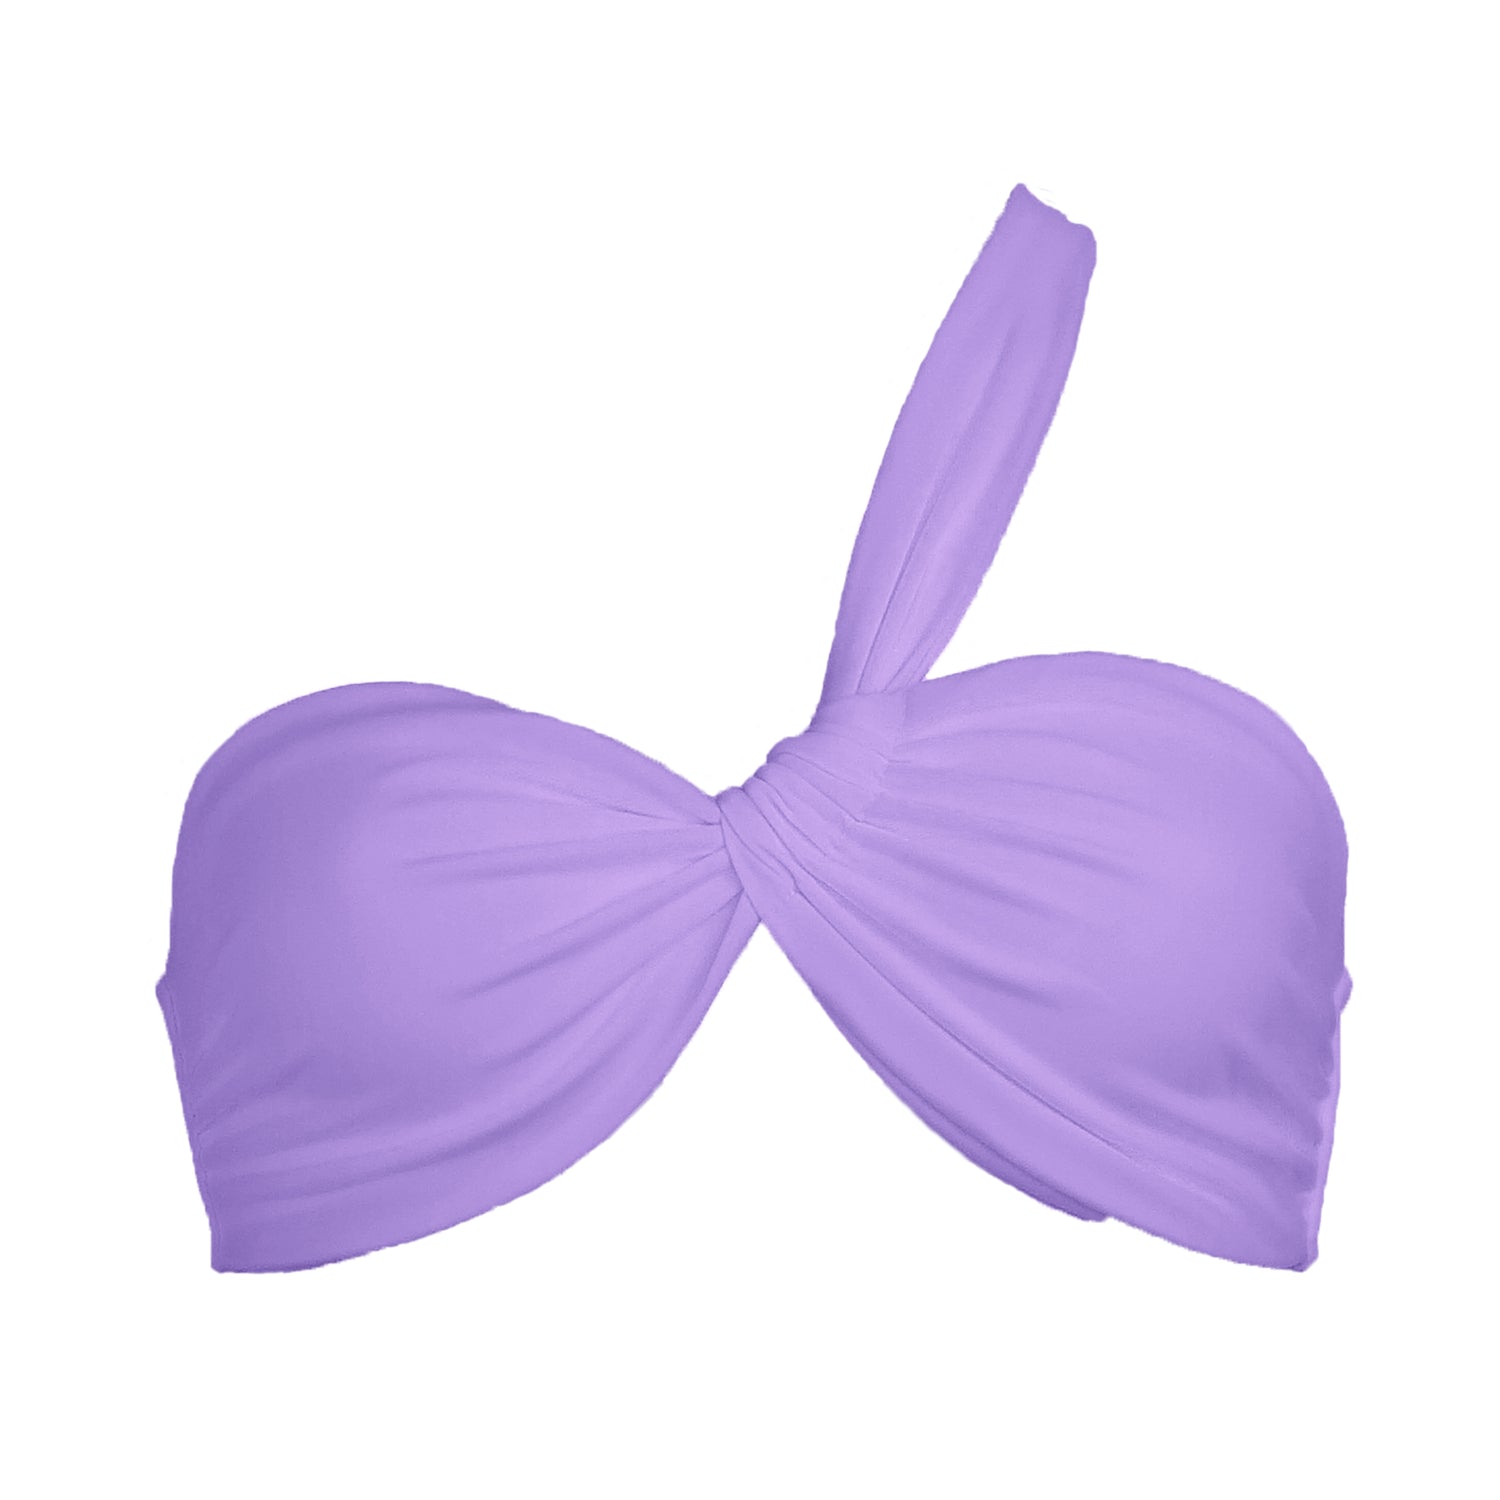 Pastel purple asymmetrical strap bikini top with adjustable tie back strap.